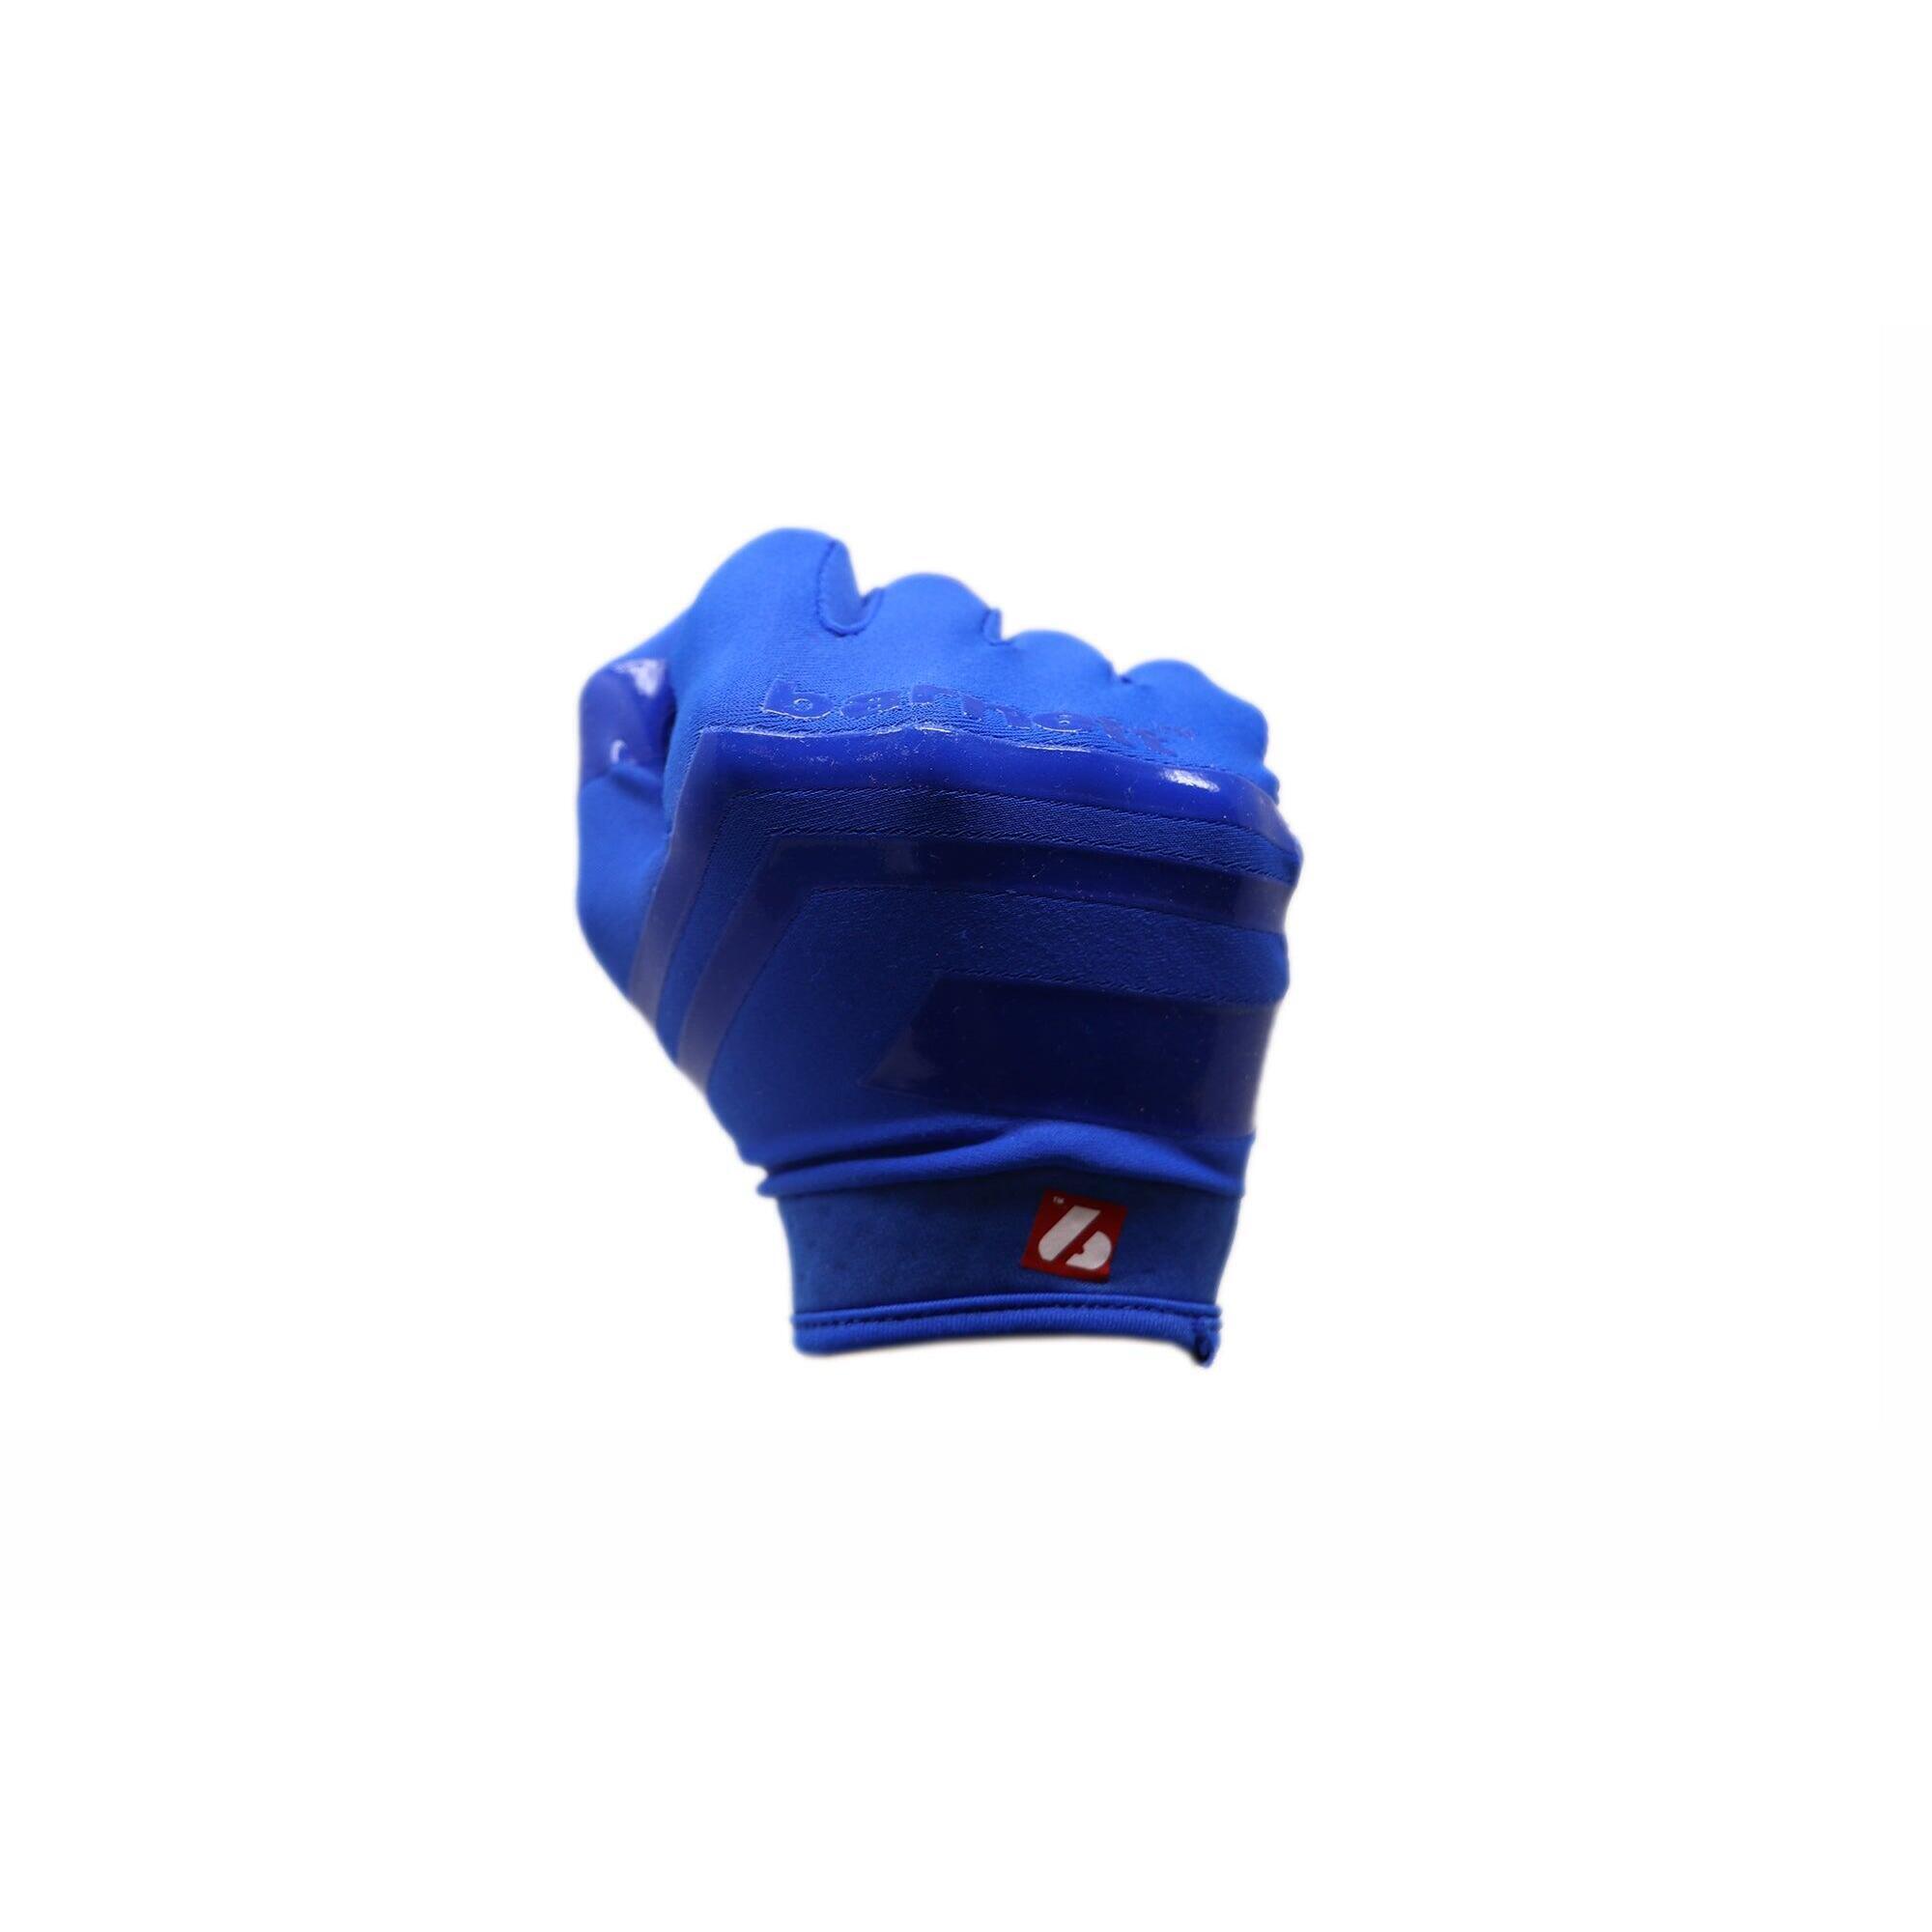  pro receiver american football gloves, RE,DB,RB, Blue FRG-03 4/5